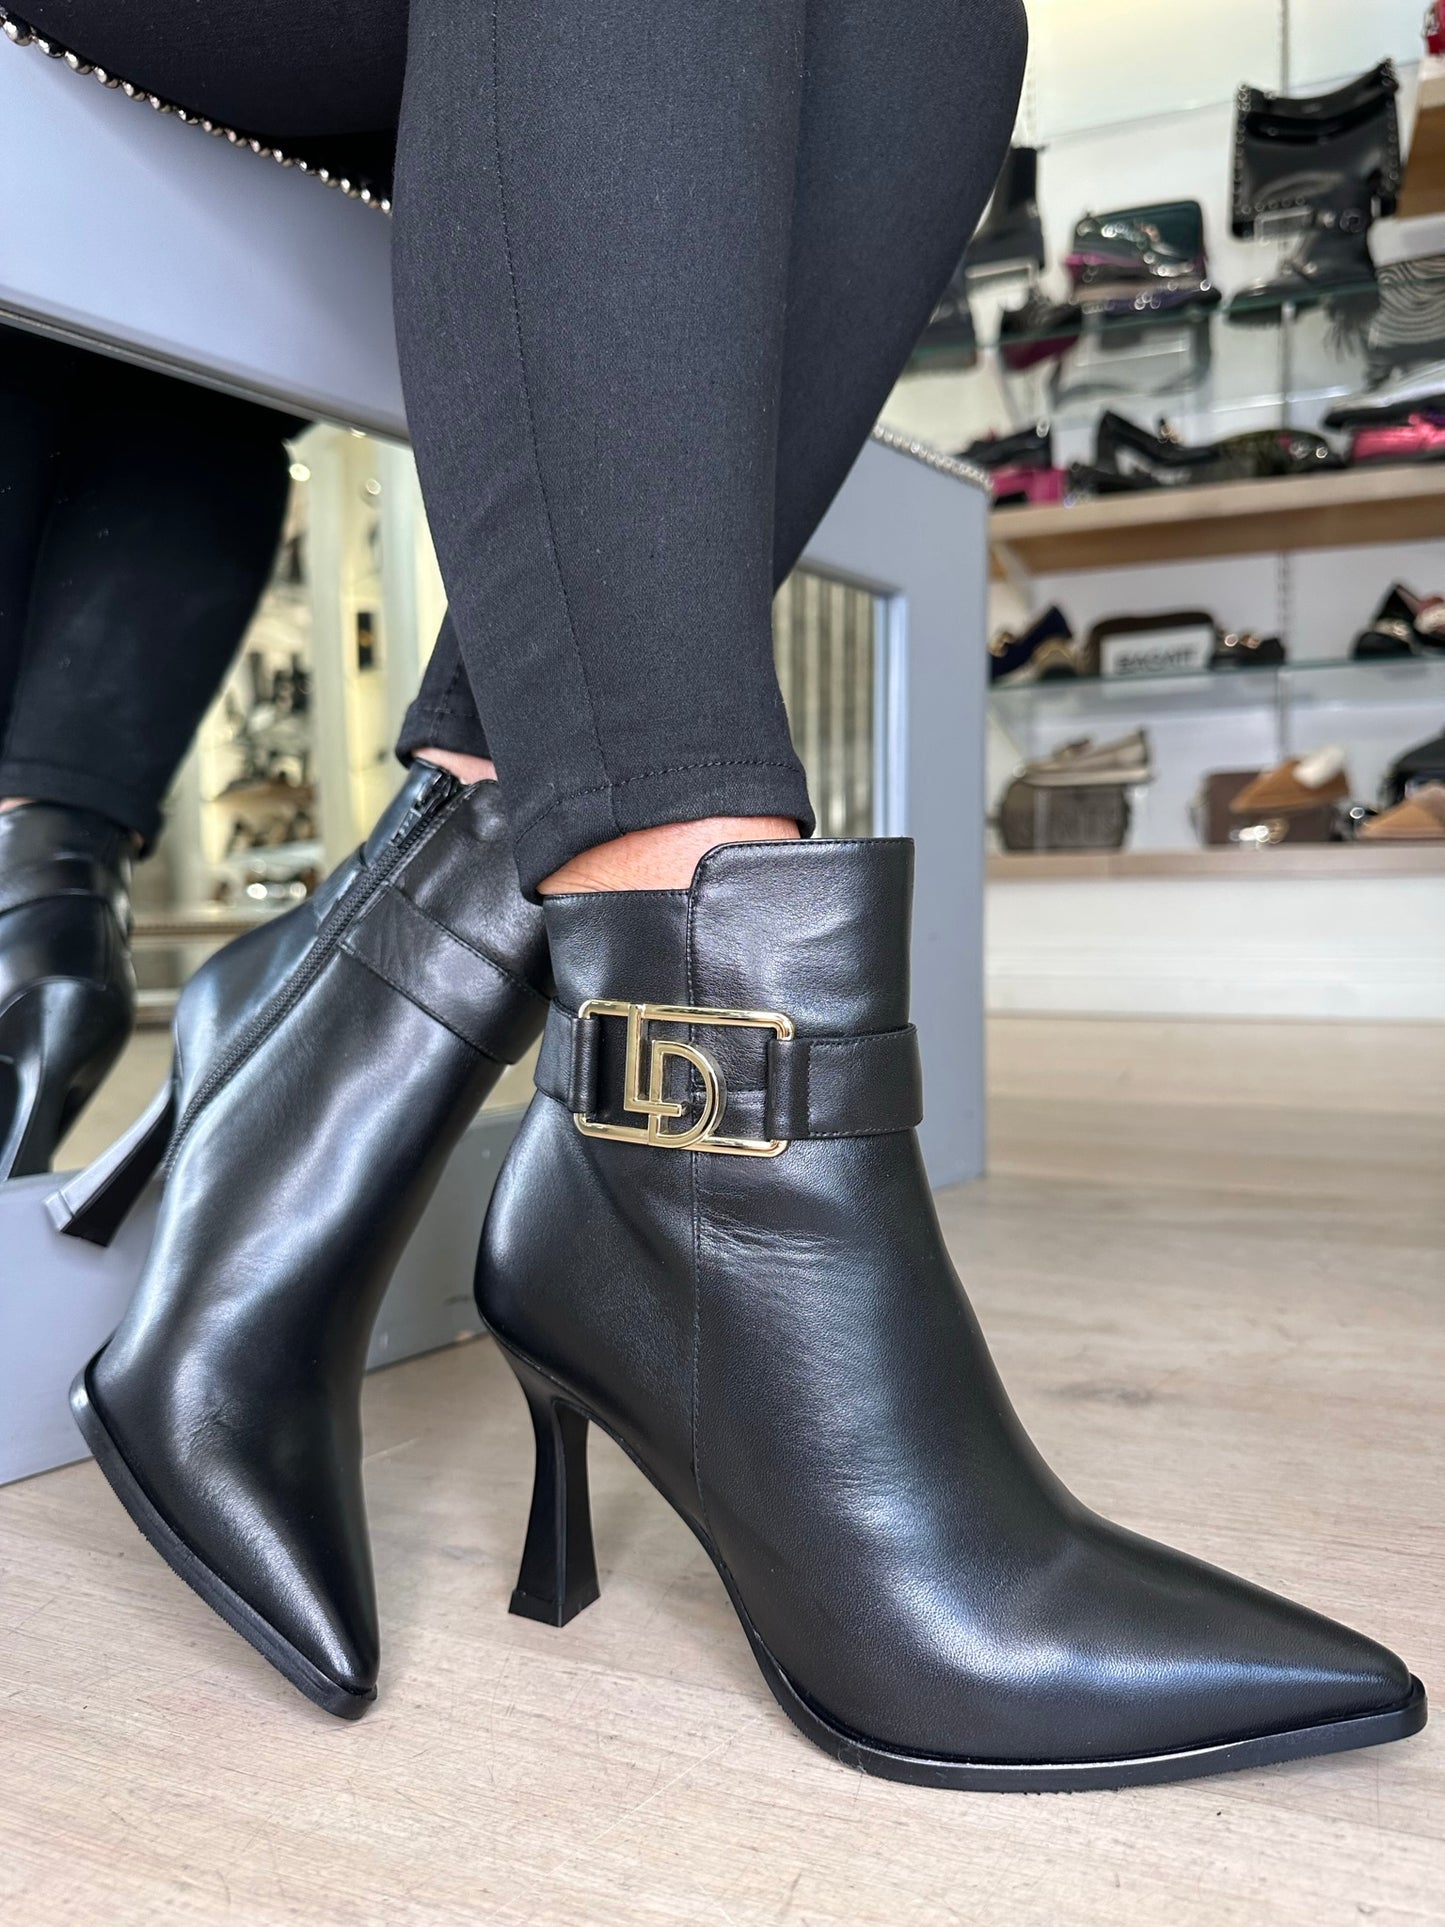 Lodi- Mositc Black Nappa Leather Pointy Toe Mid Heel Short Boot